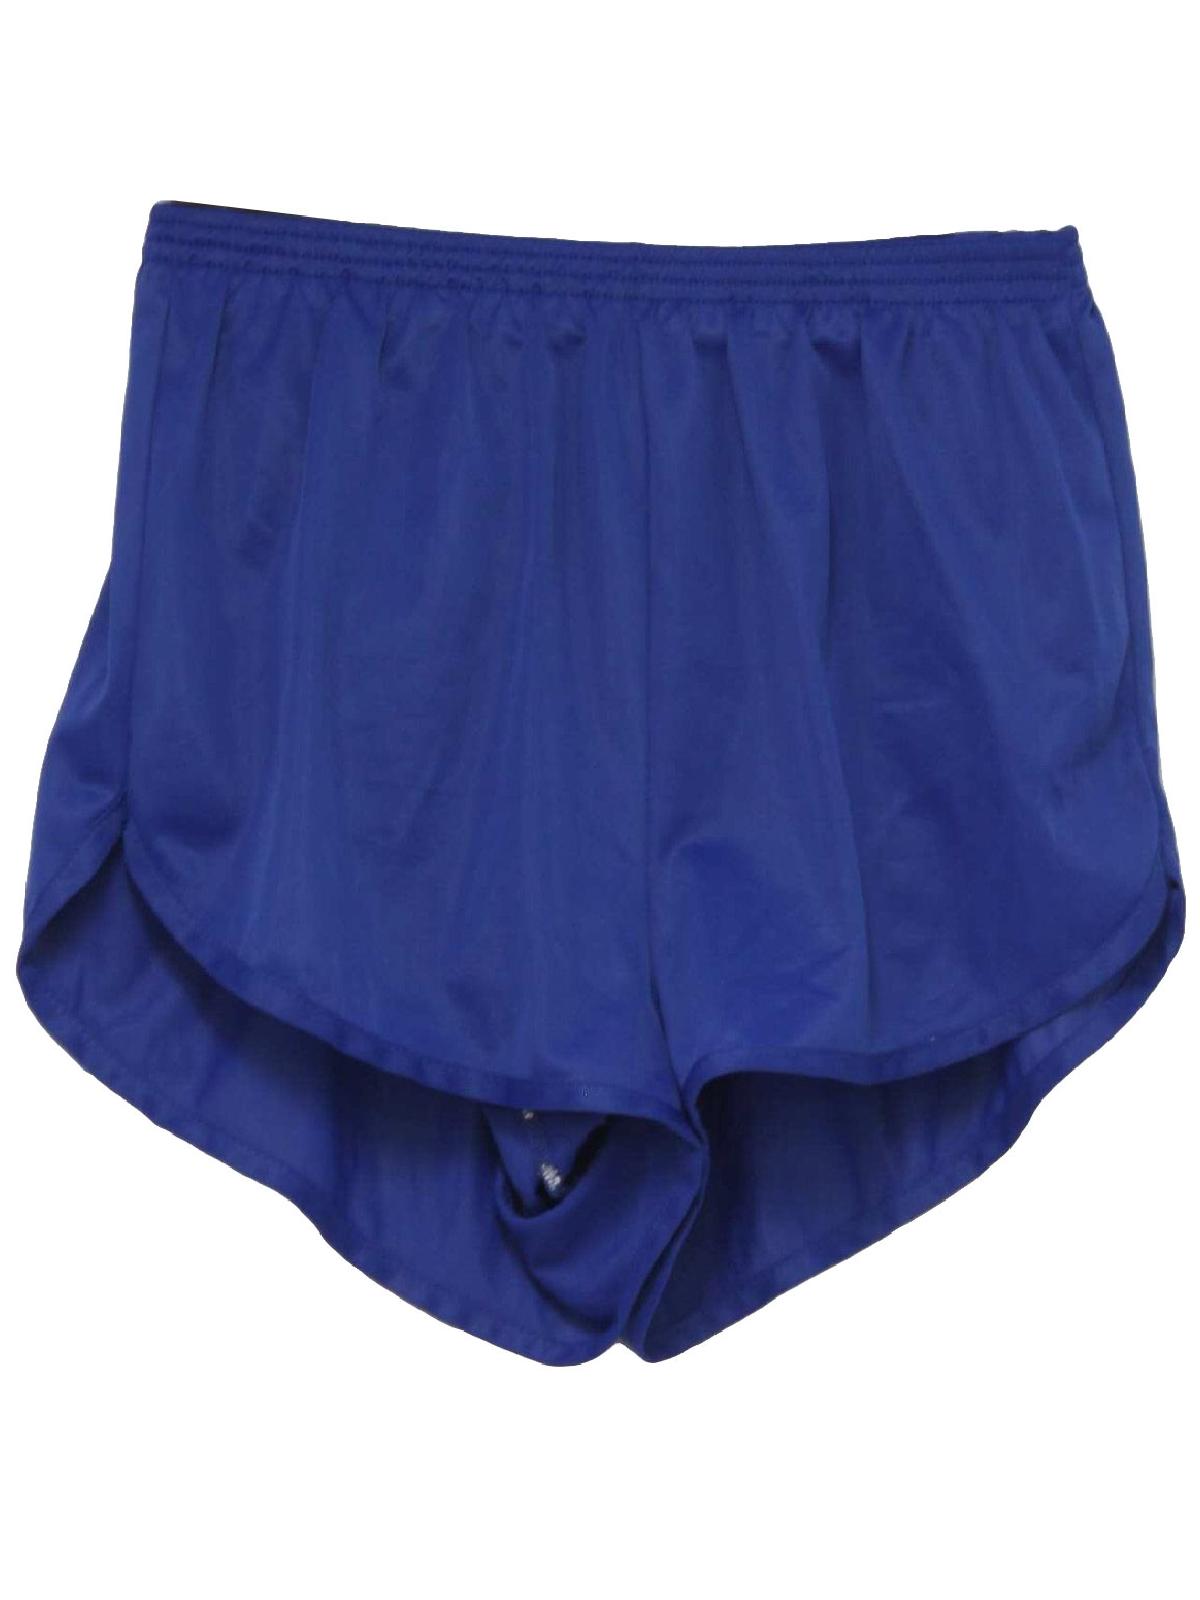 Retro 80's Shorts: 80s -care label- Womens cobalt blue nylon running ...